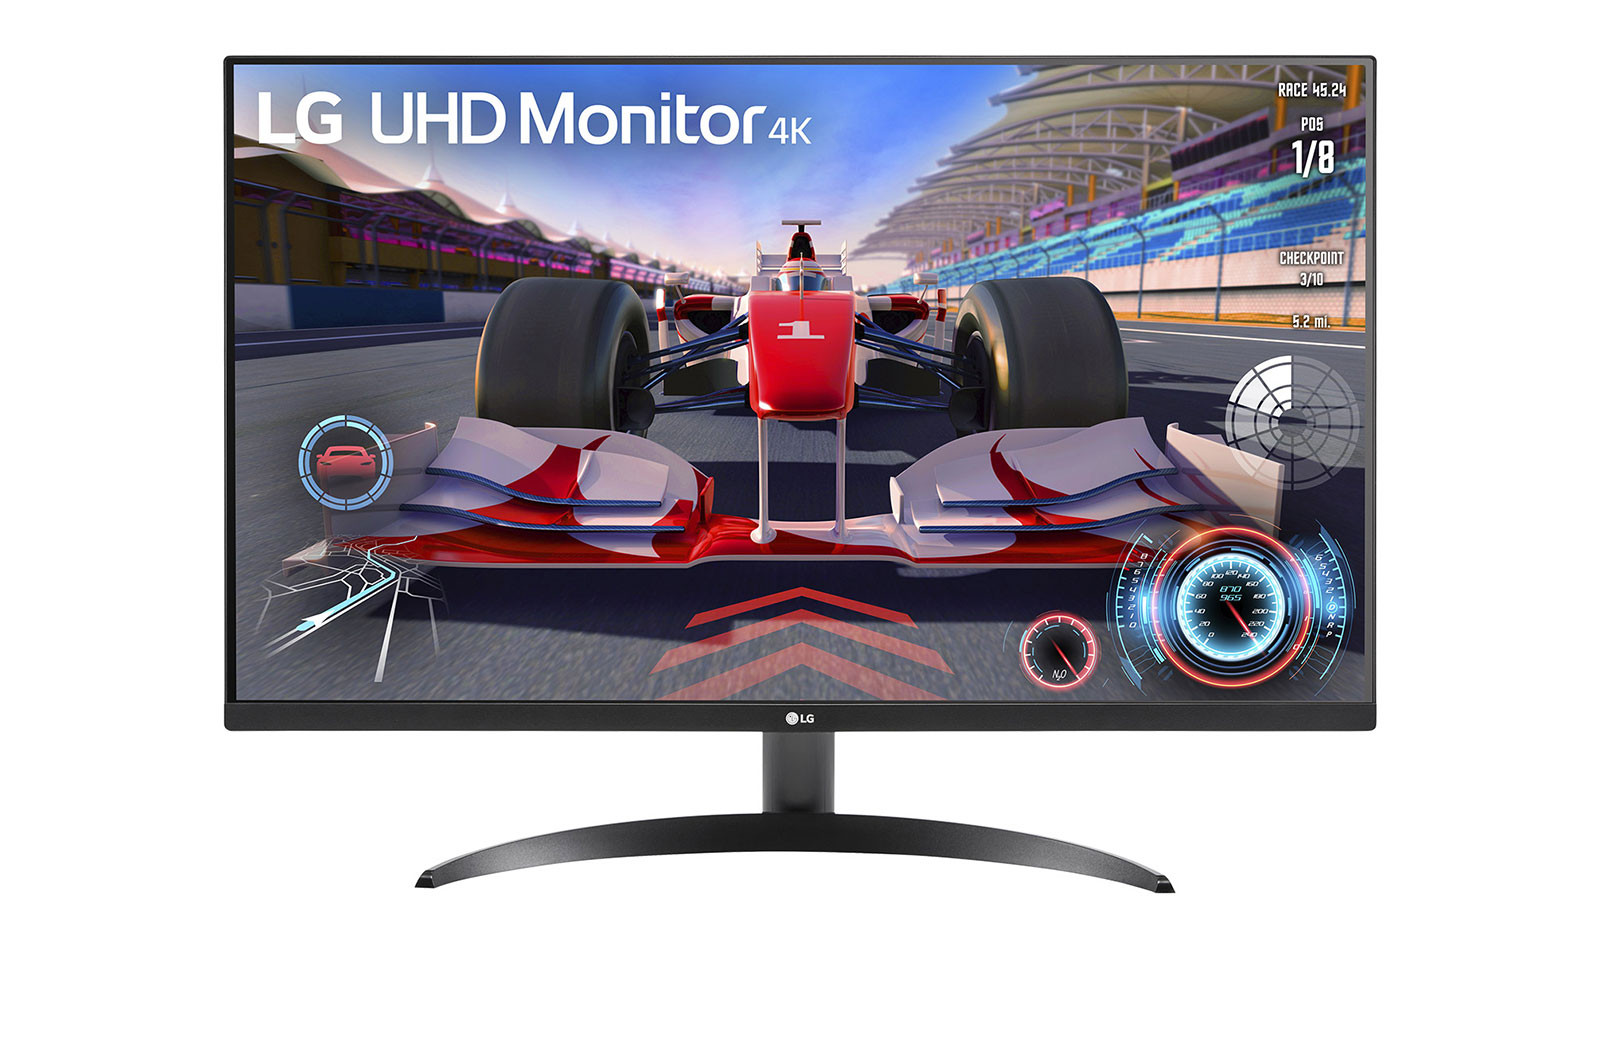 LG-32UR500-B-UHD-4K-HDR-Monitor